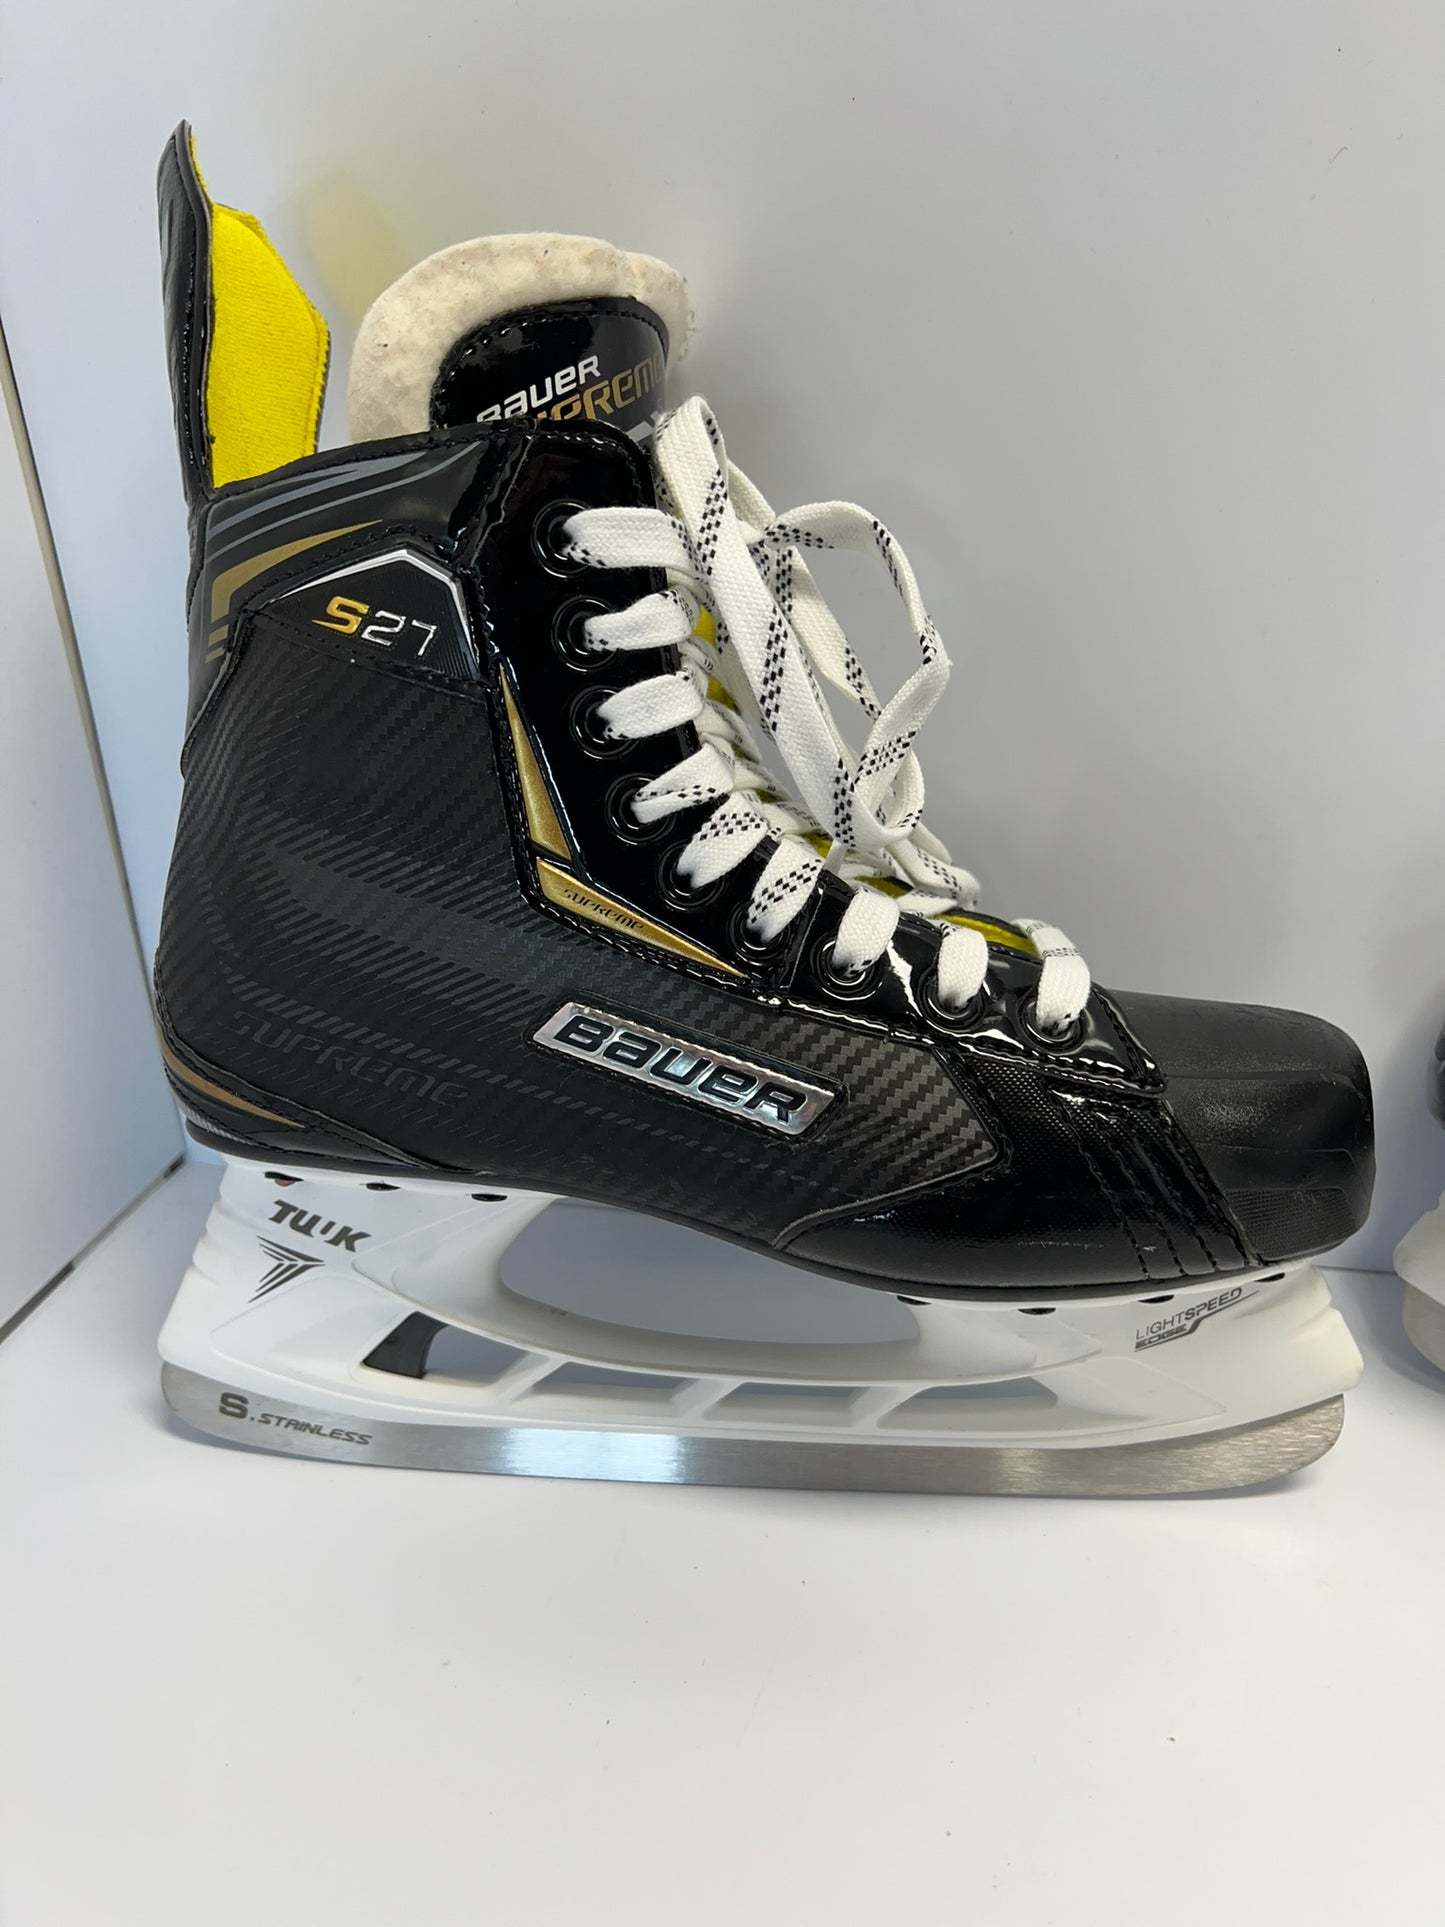 Hockey Skates Men's Size 6.5 Shoe 5.5 Skate Size Bauer Supreme S27 New Demo Model